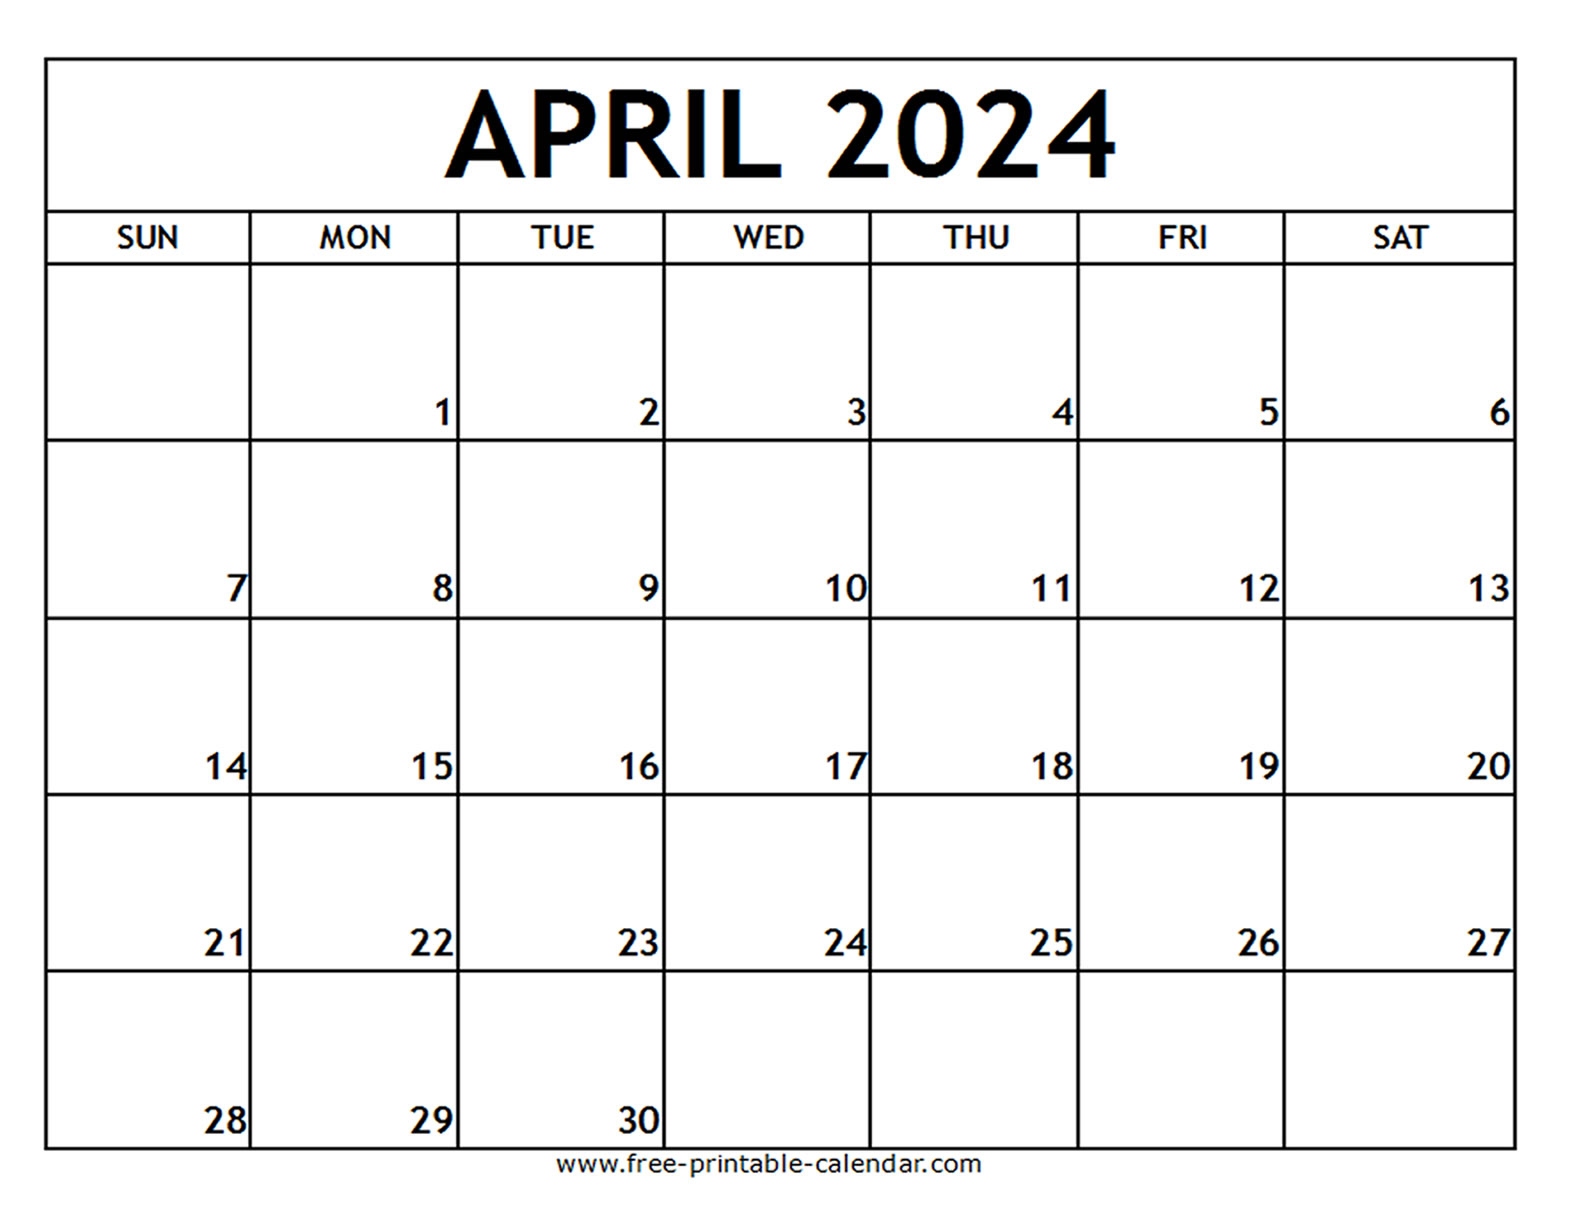 April 2024 Printable Calendar - Free-Printable-Calendar with Free Printable Blank Calendar April 2024